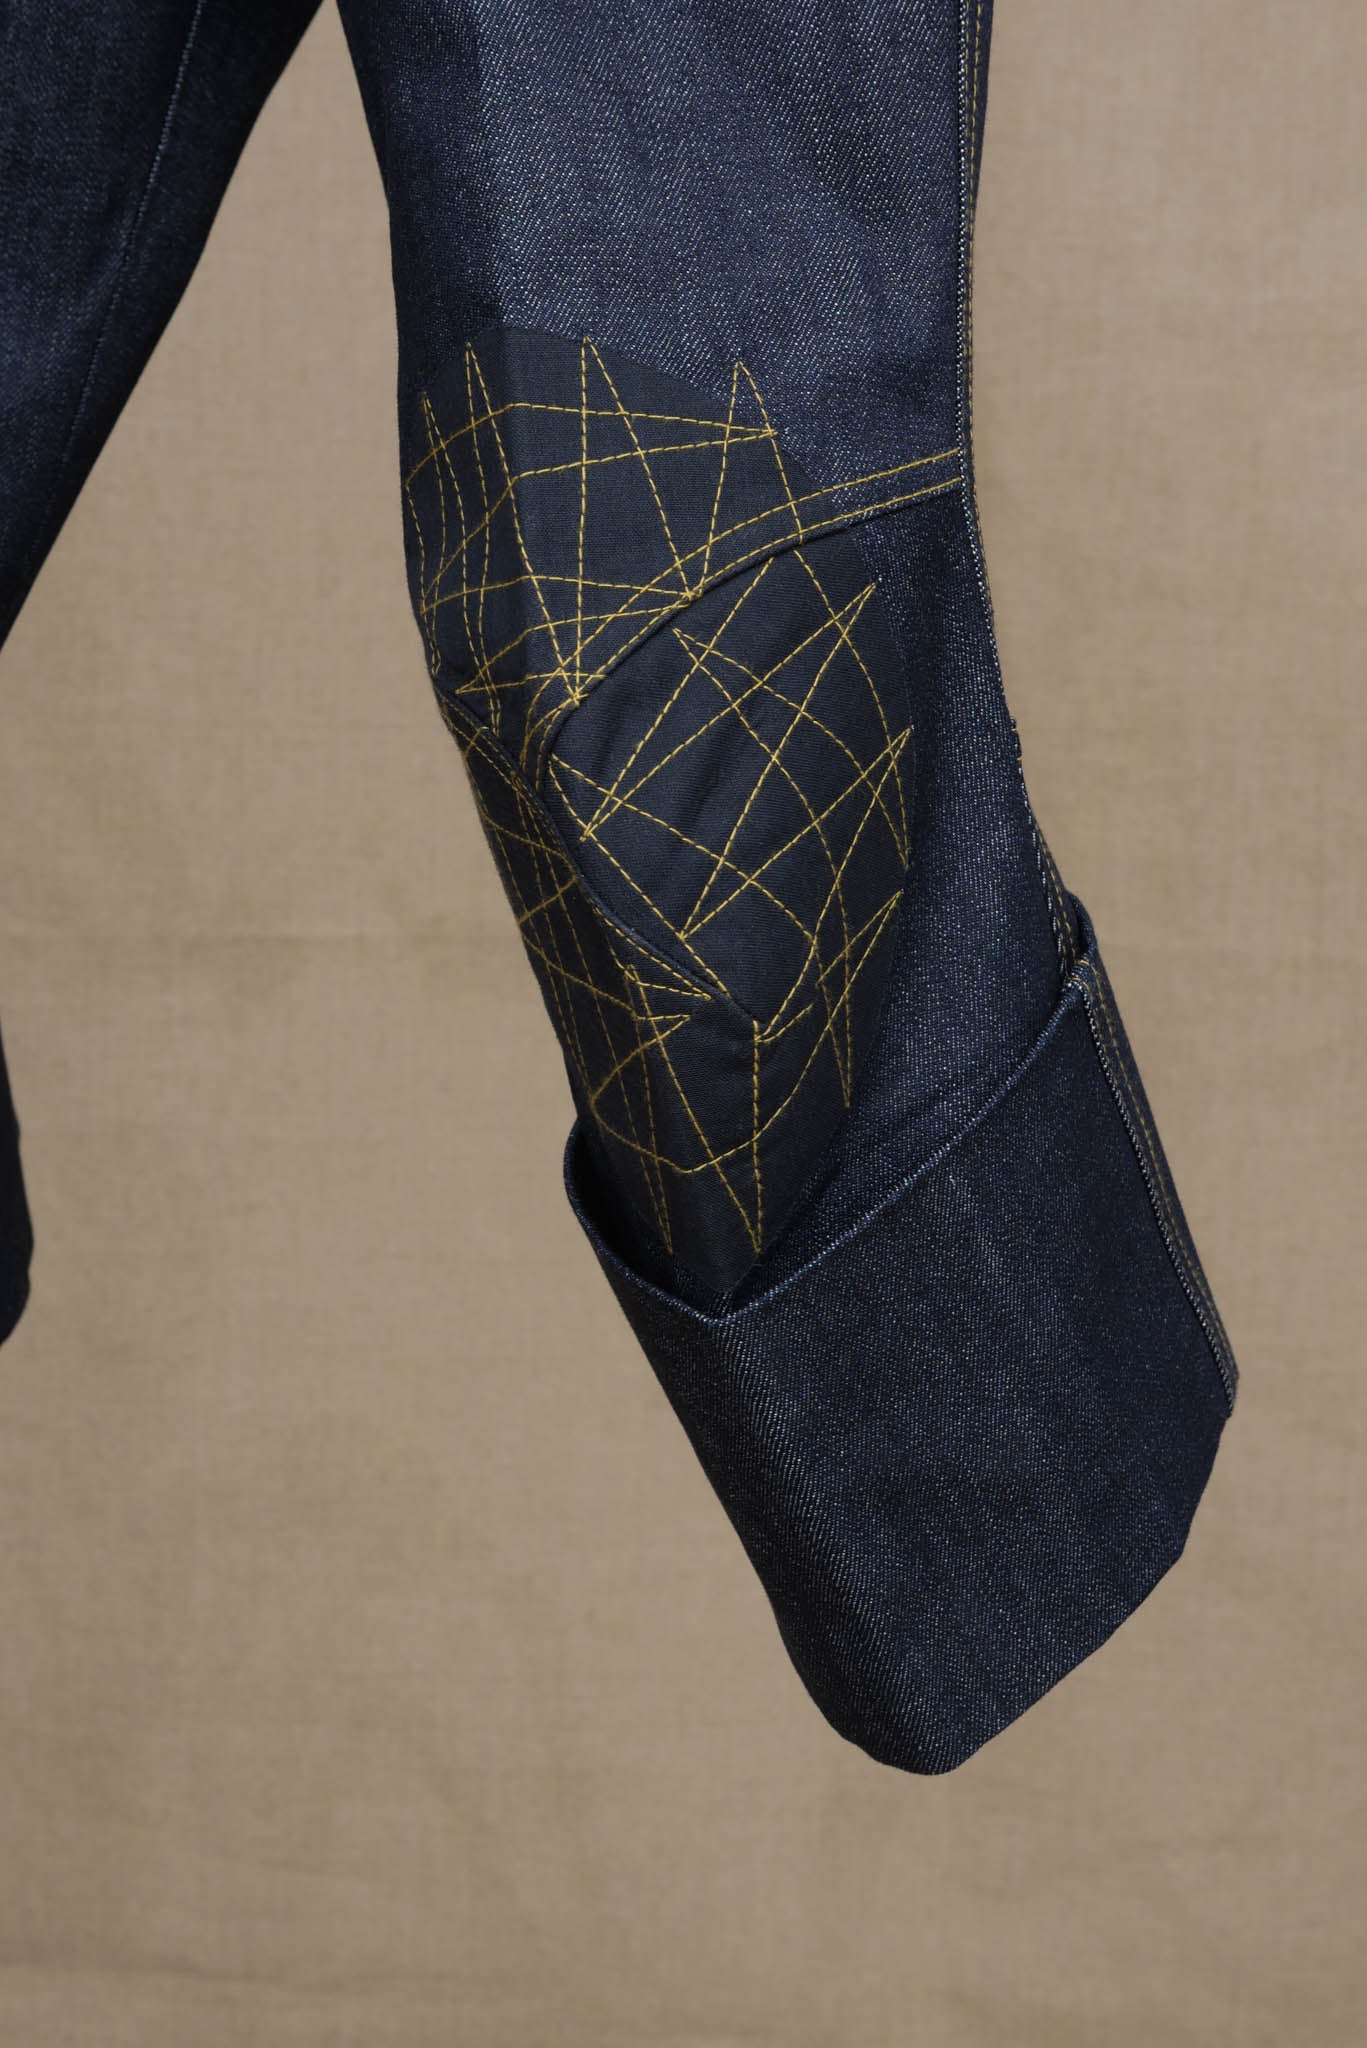 Trousers 733- Cotton100% Denim- Black Facing Patch- Yellow Stitch